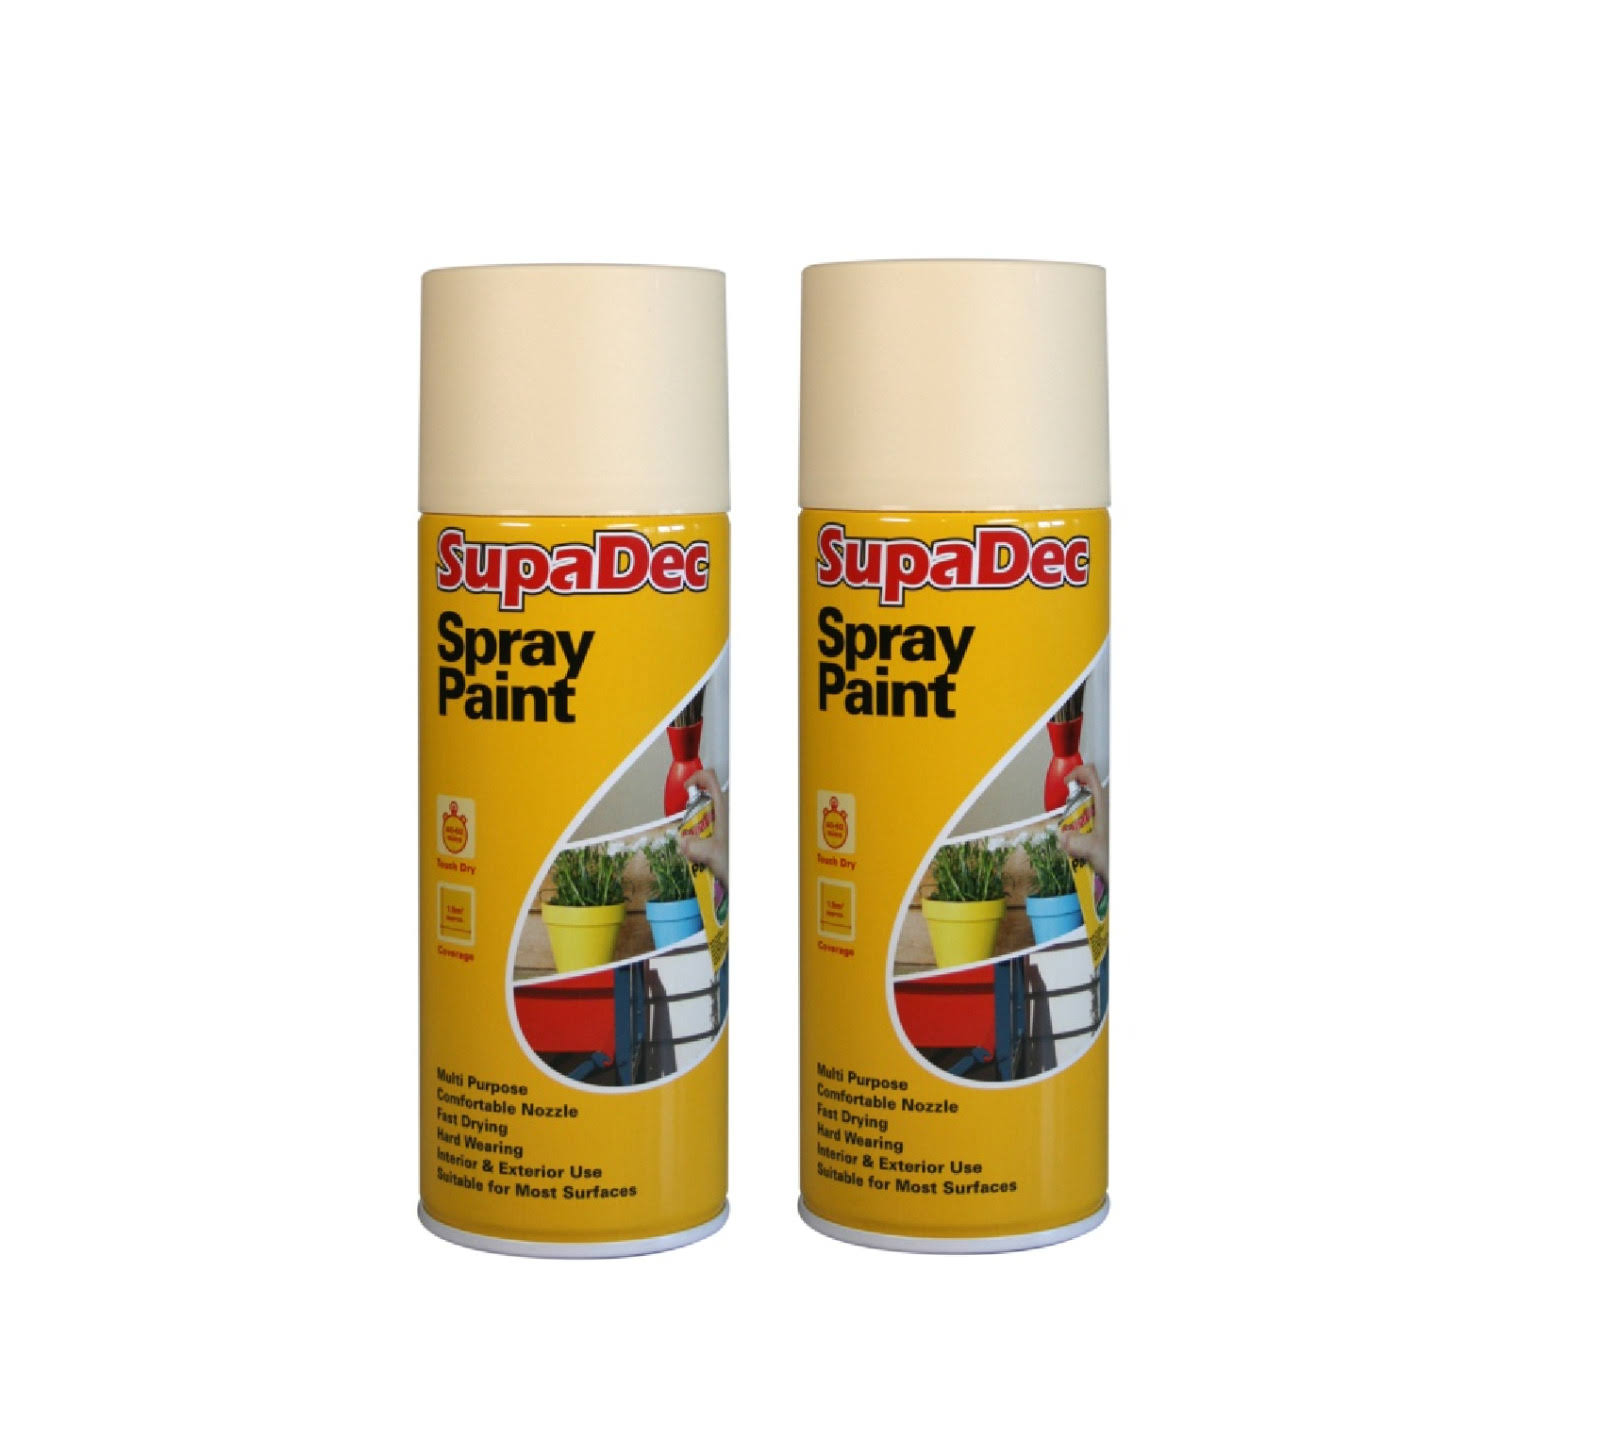 Supadec Spray Paint - Cream, 400ml